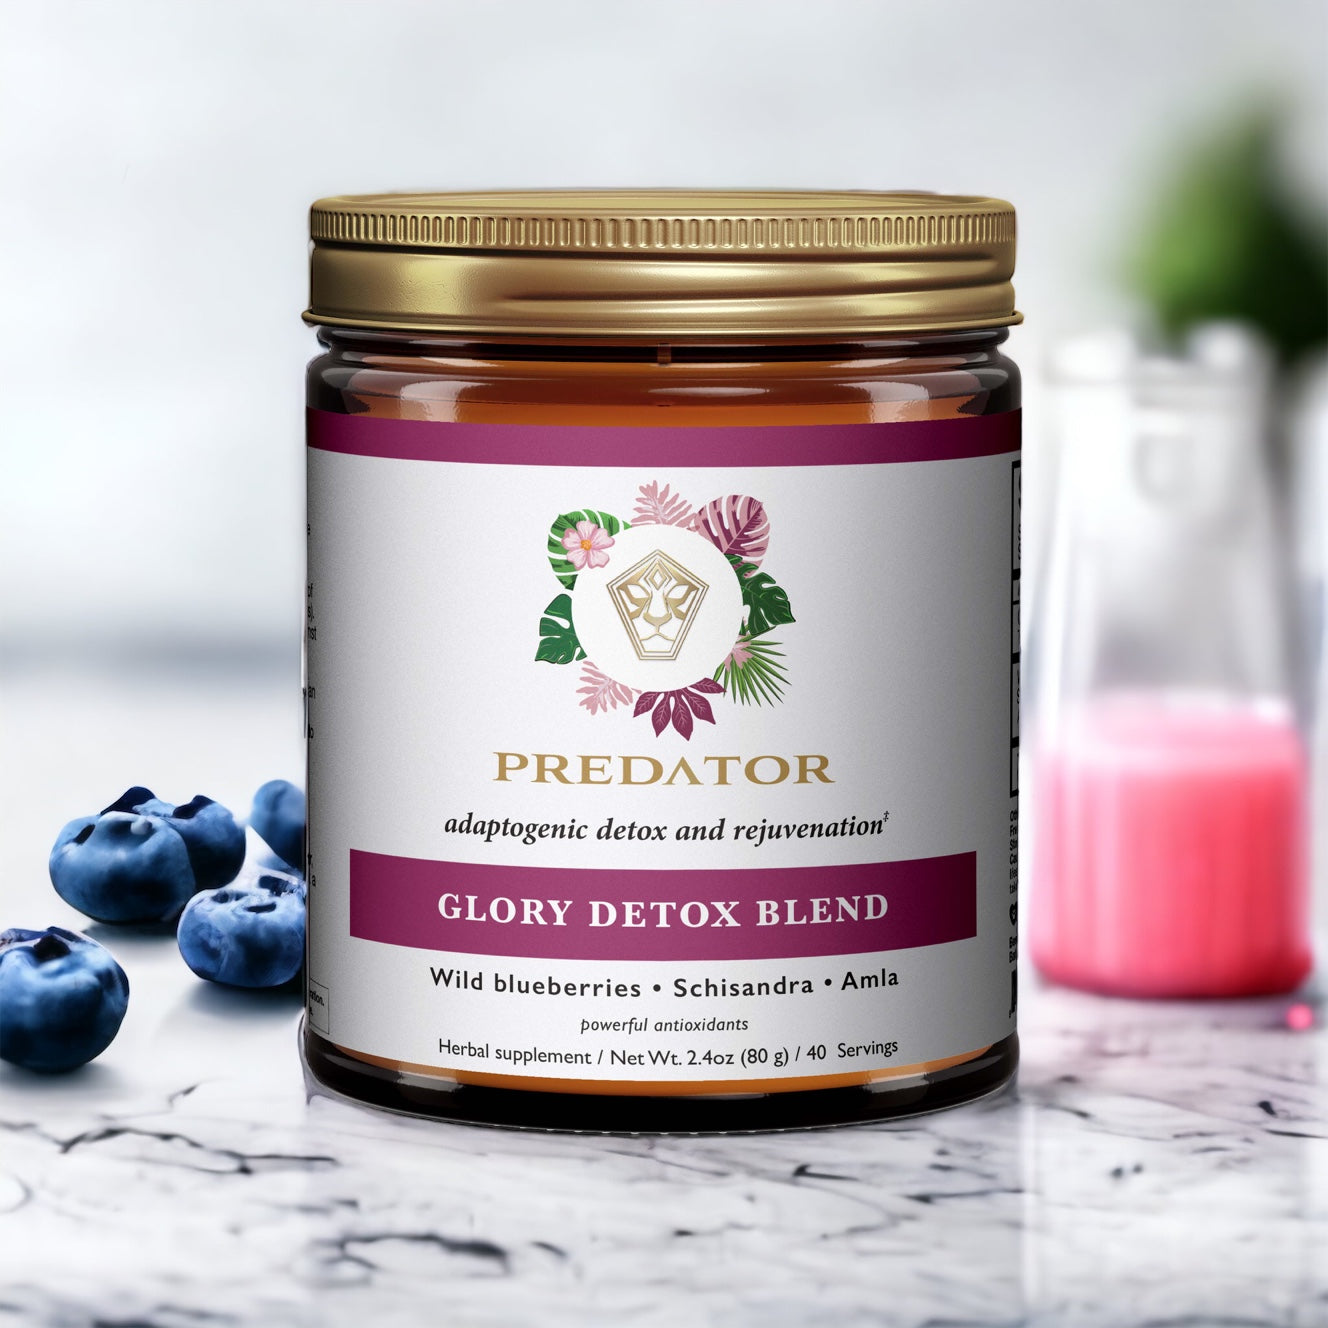 Glory Detox Blend - Wild Adaptogenic Berries - Wild Blueberries, Schisandra berries and Amla berries - 35 berries per teaspoon